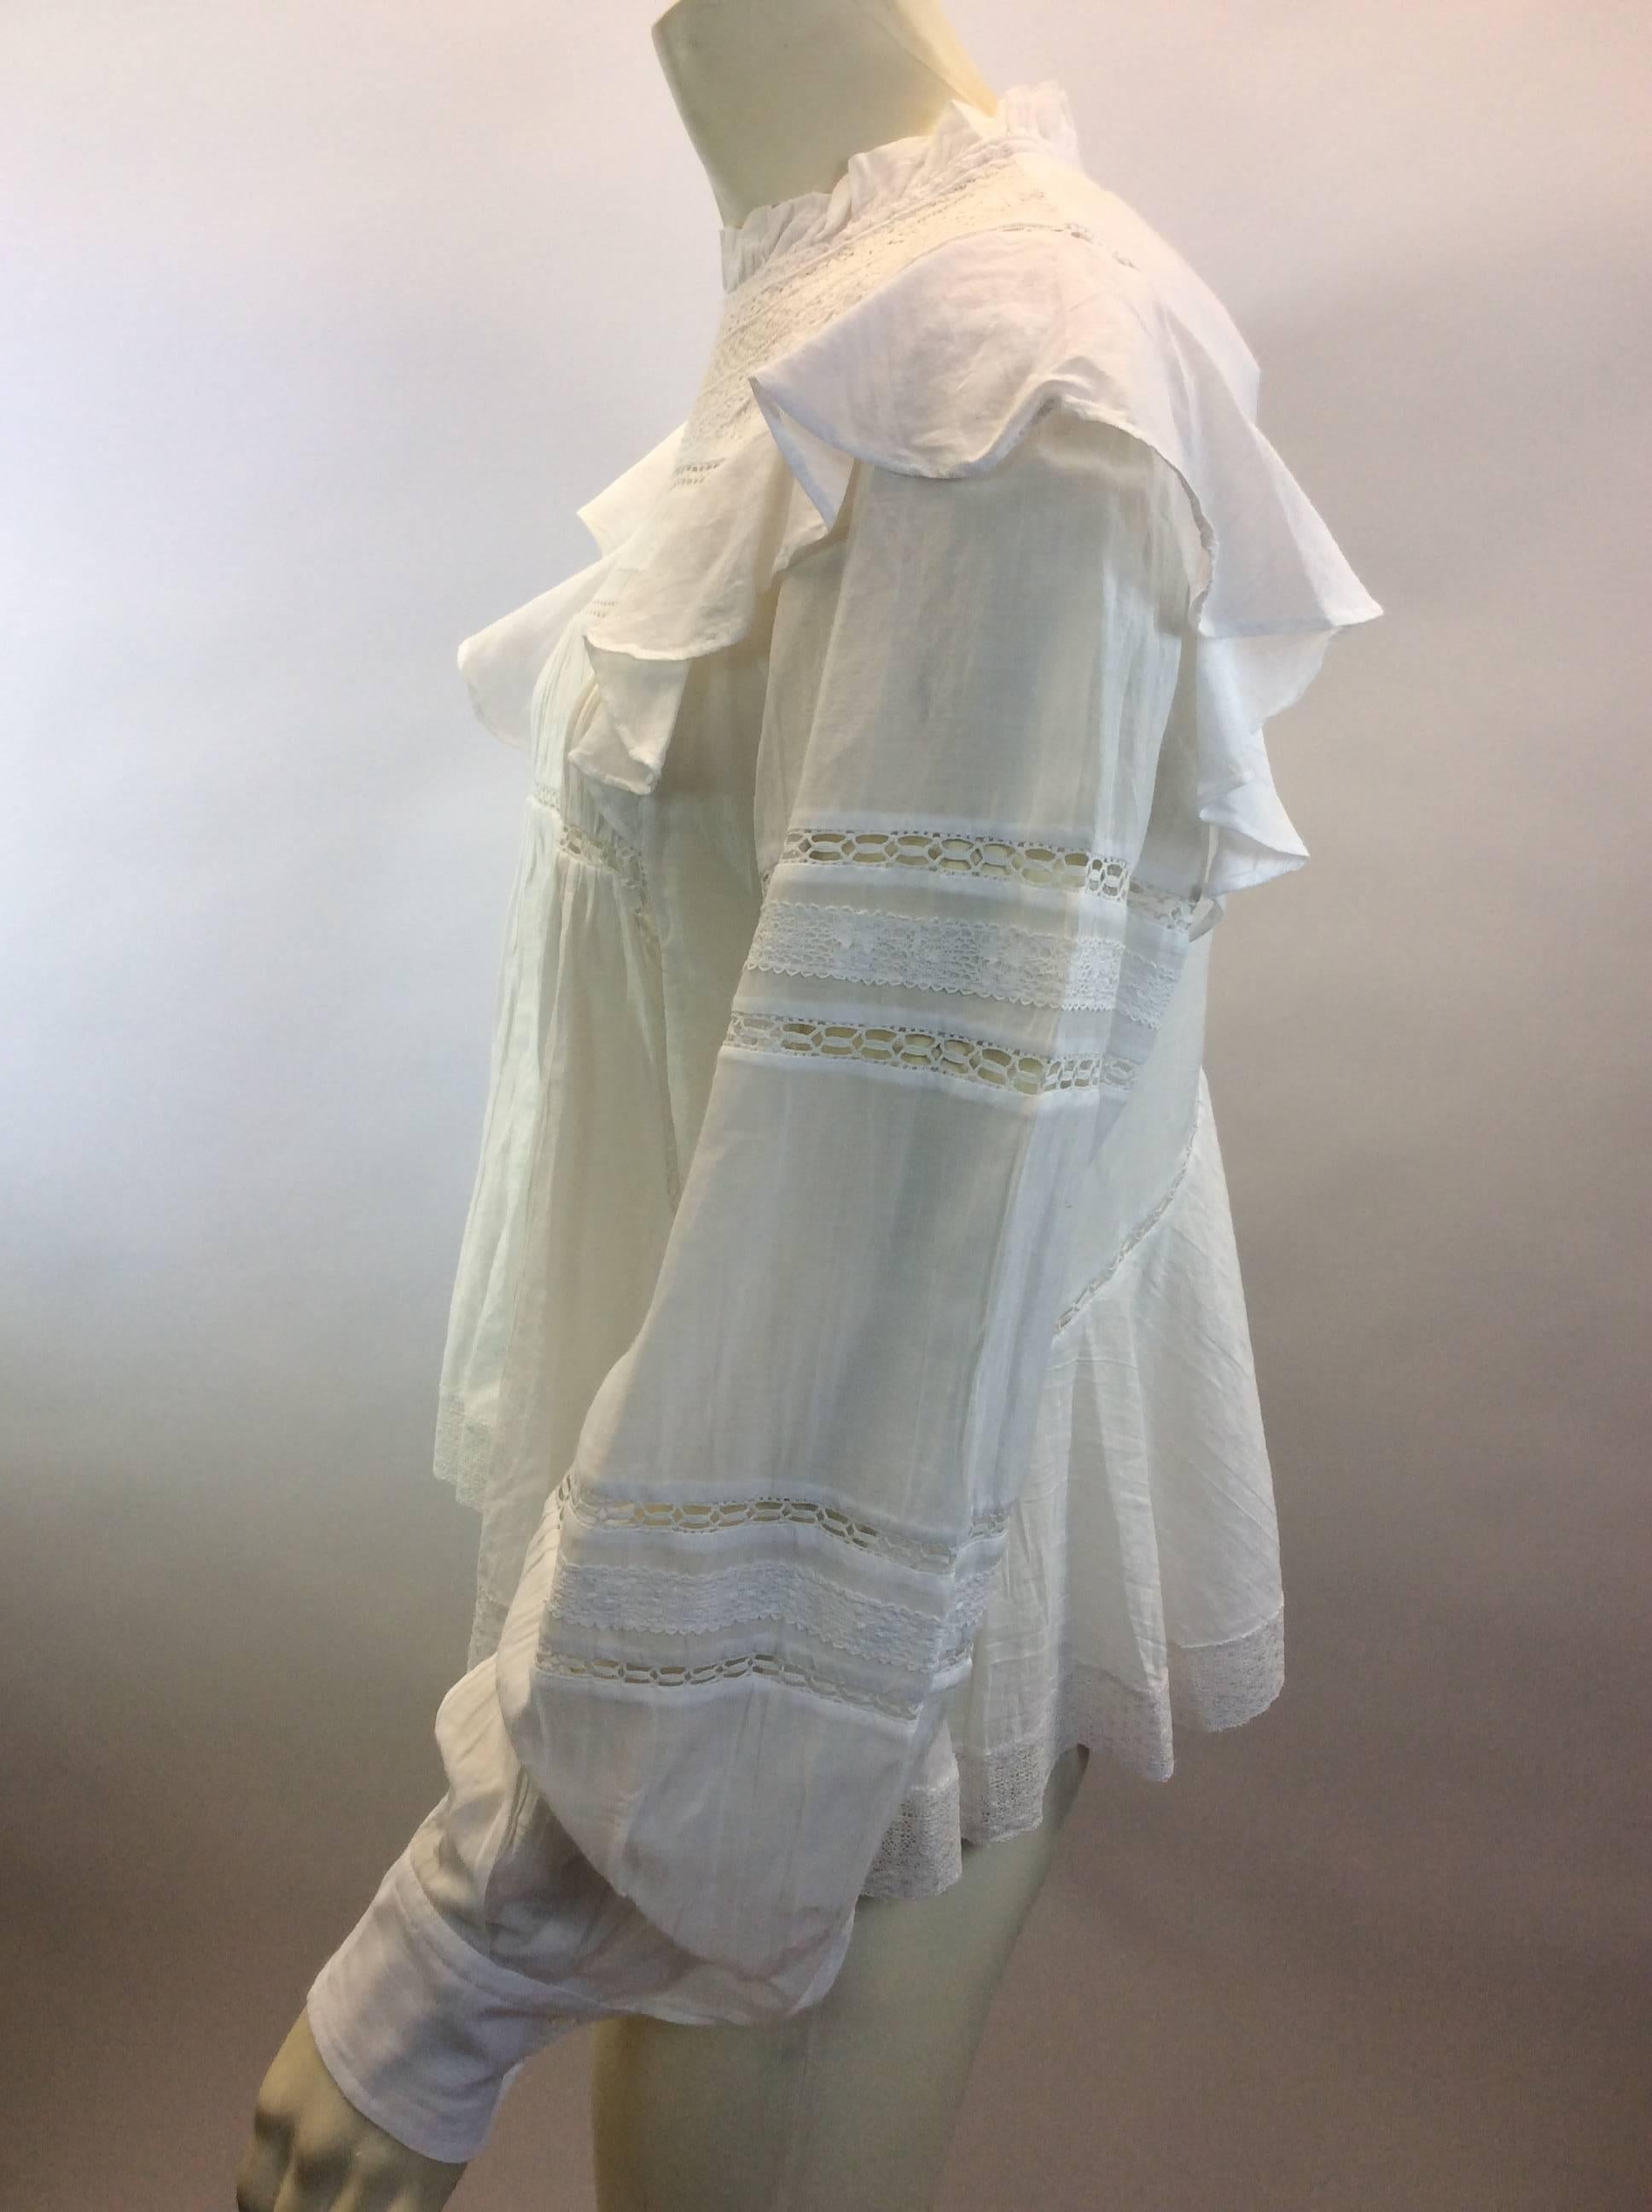 Isabel Marant White Cotton Lace Blouse NWT
Size 36
Length 21